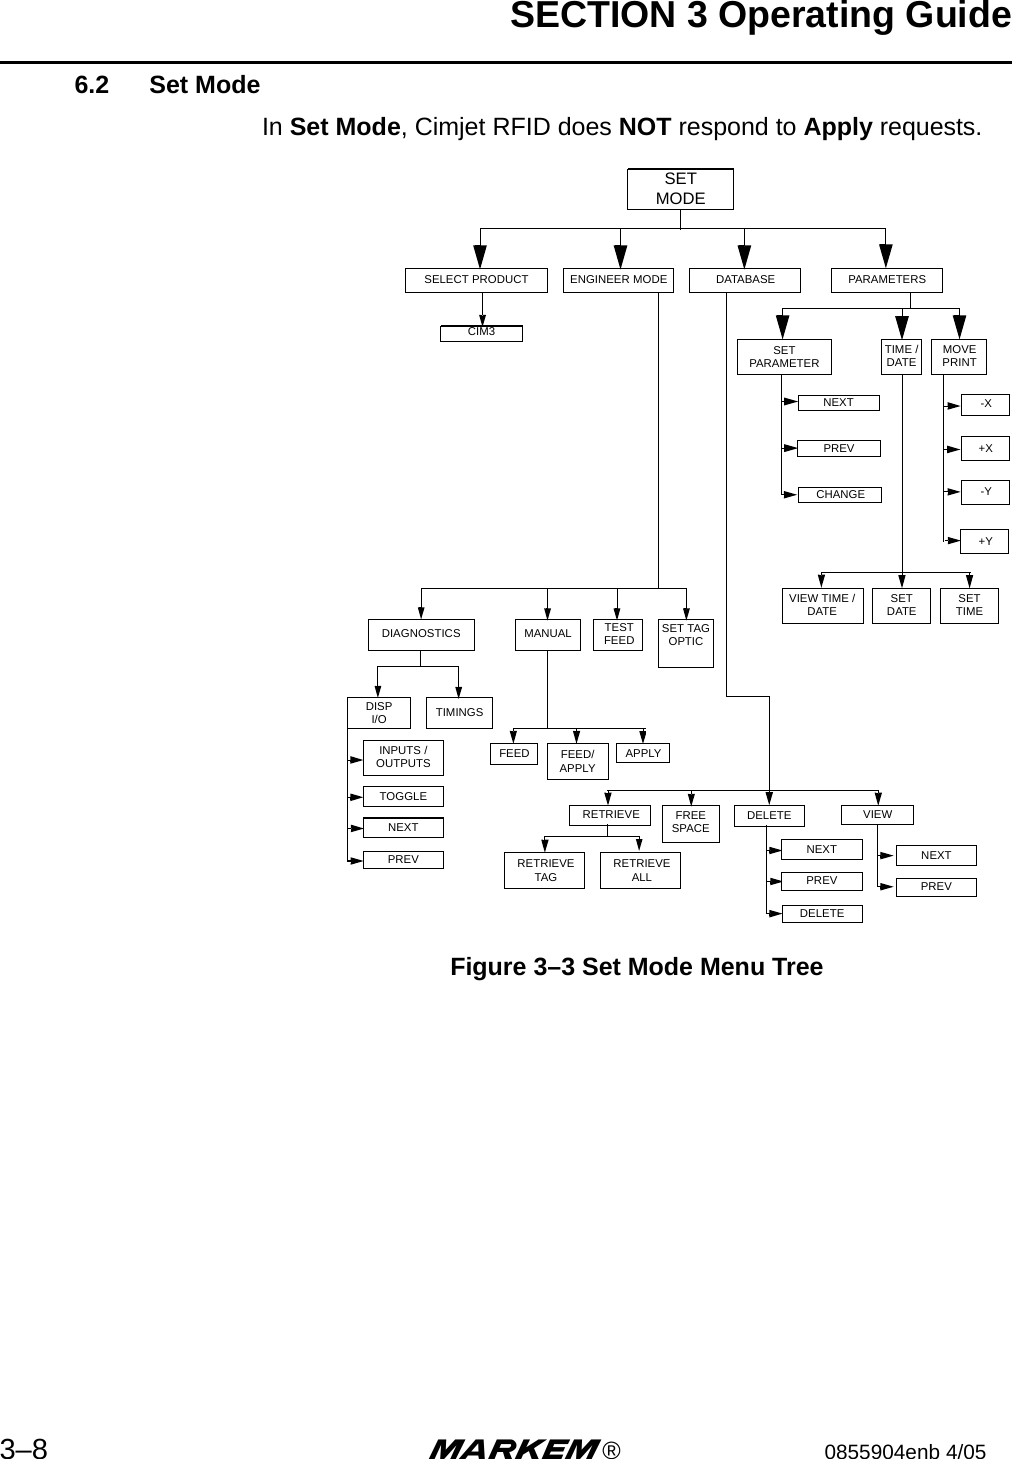 SECTION 3 Operating Guide3–8 m®0855904enb 4/056.2 Set ModeIn Set Mode, Cimjet RFID does NOT respond to Apply requests.Figure 3–3 Set Mode Menu TreeSETMODEPARAMETERSTIME / DATE MOVE PRINTCIM3-X +X -Y +Y VIEW TIME / DATE SET DATE SETTIMEDIAGNOSTICS MANUAL TEST FEED SET TAG OPTICDISPI/OINPUTS / OUTPUTSTIMINGSFEED FEED/ APPLYAPPLY RIBBON FEEDTOGGLENEXTPREV RETRIEVETAG RETRIEVEALLRETRIEVE FREE SPACE DELETE VIEWDATABASEENGINEER MODESELECT PRODUCTSETPARAMETERNEXTPREVCHANGENEXTPREVNEXTPREVDELETE